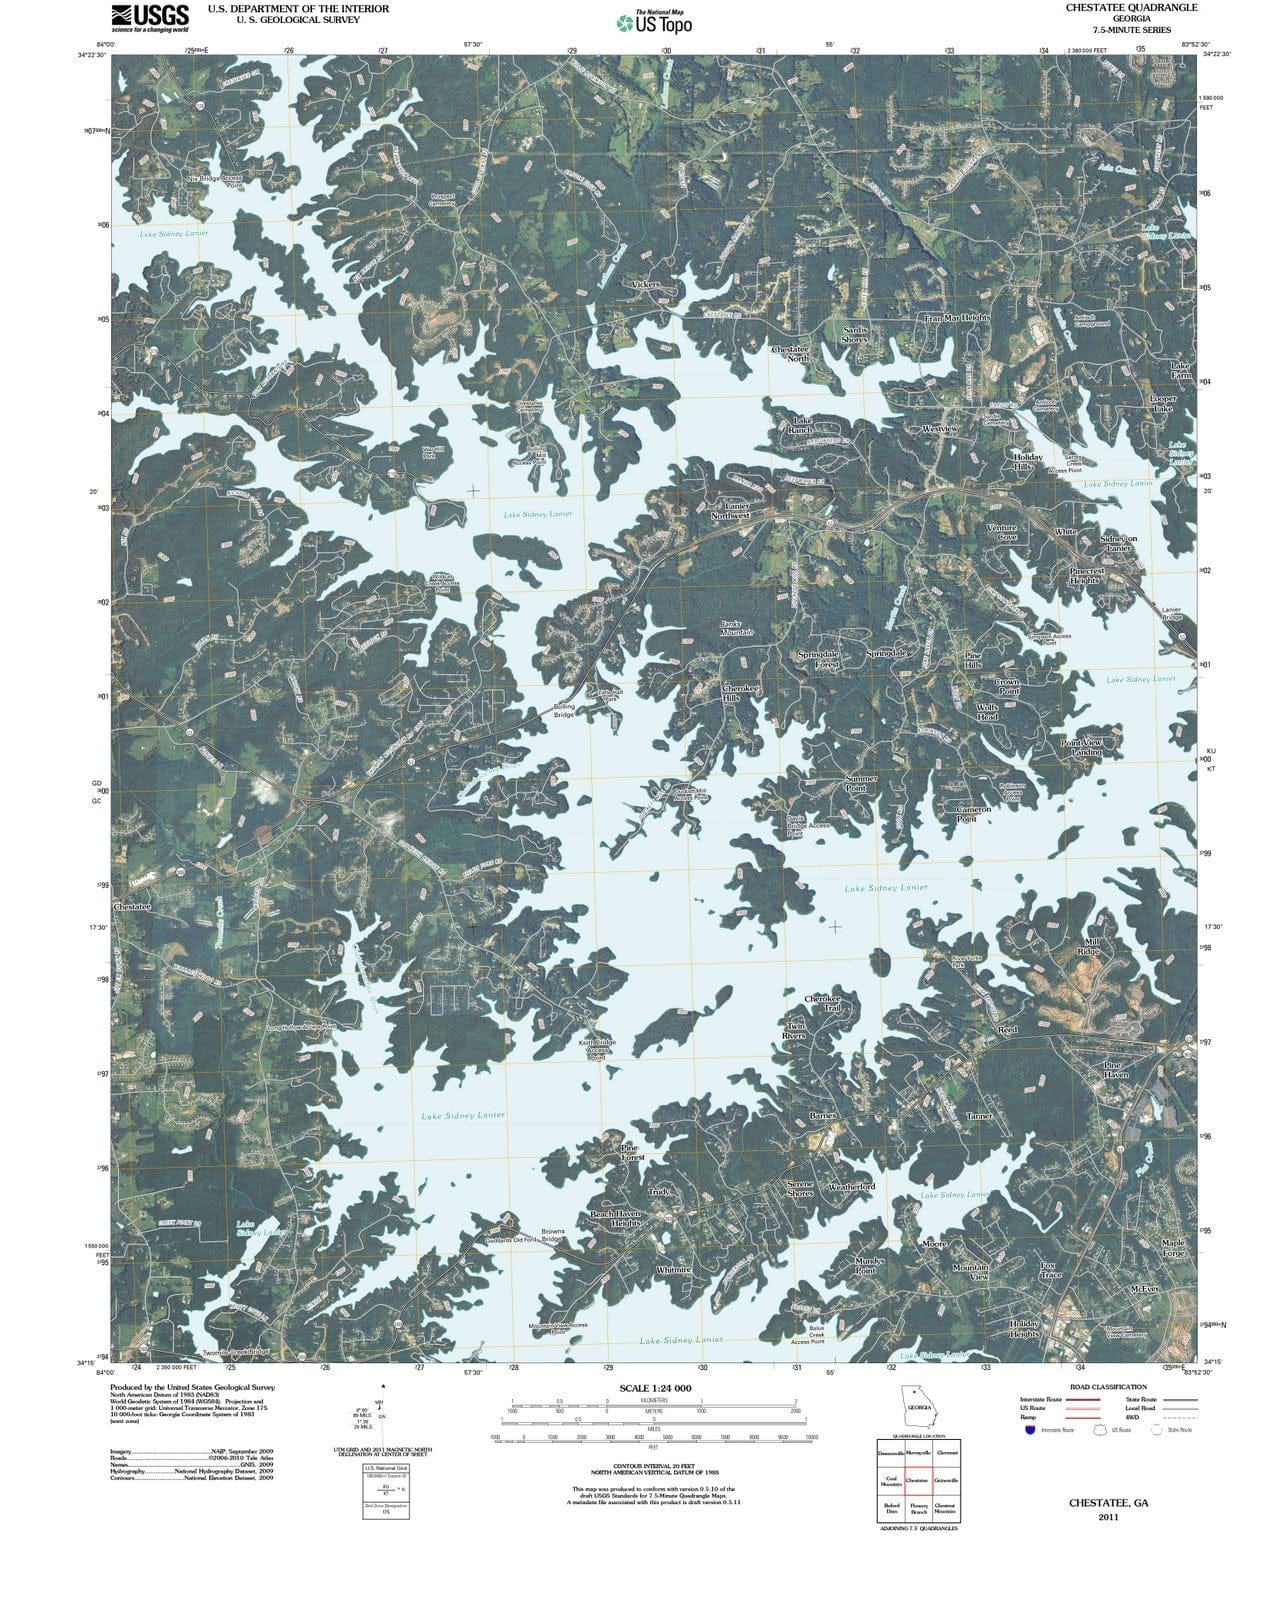 2011 Chestatee, GA - Georgia - USGS Topographic Map